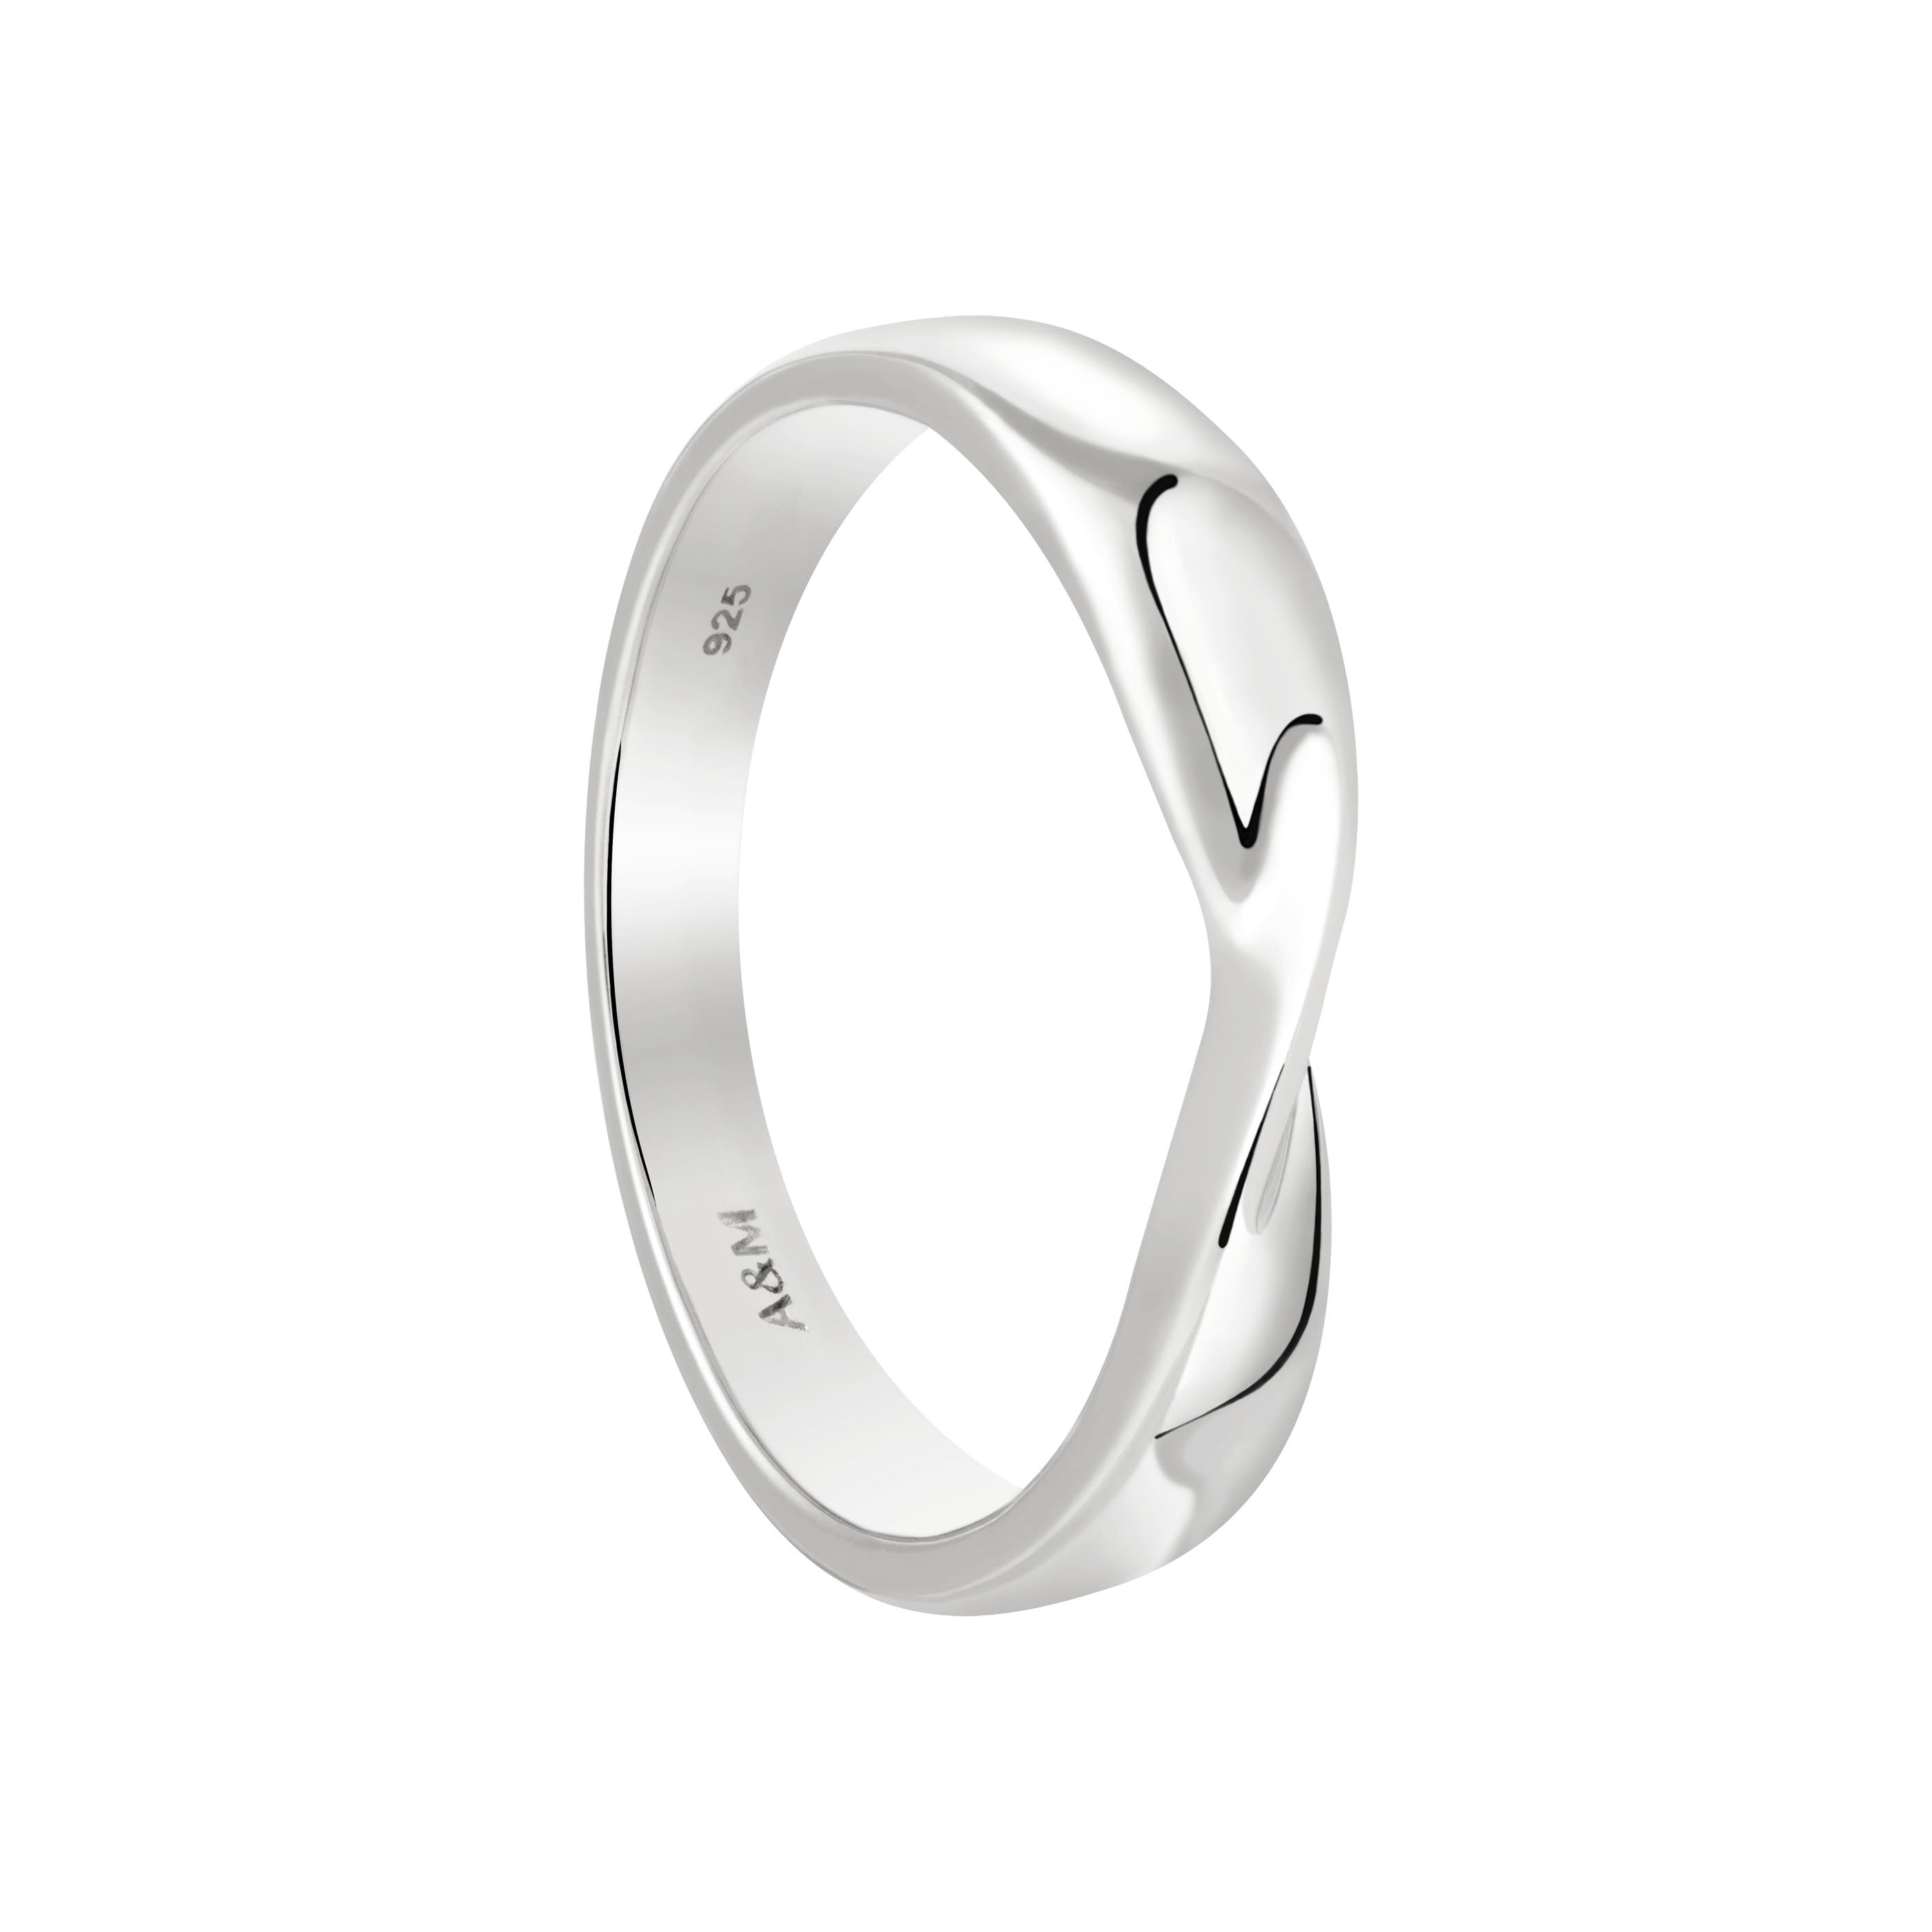 Elemental Ring in Silver